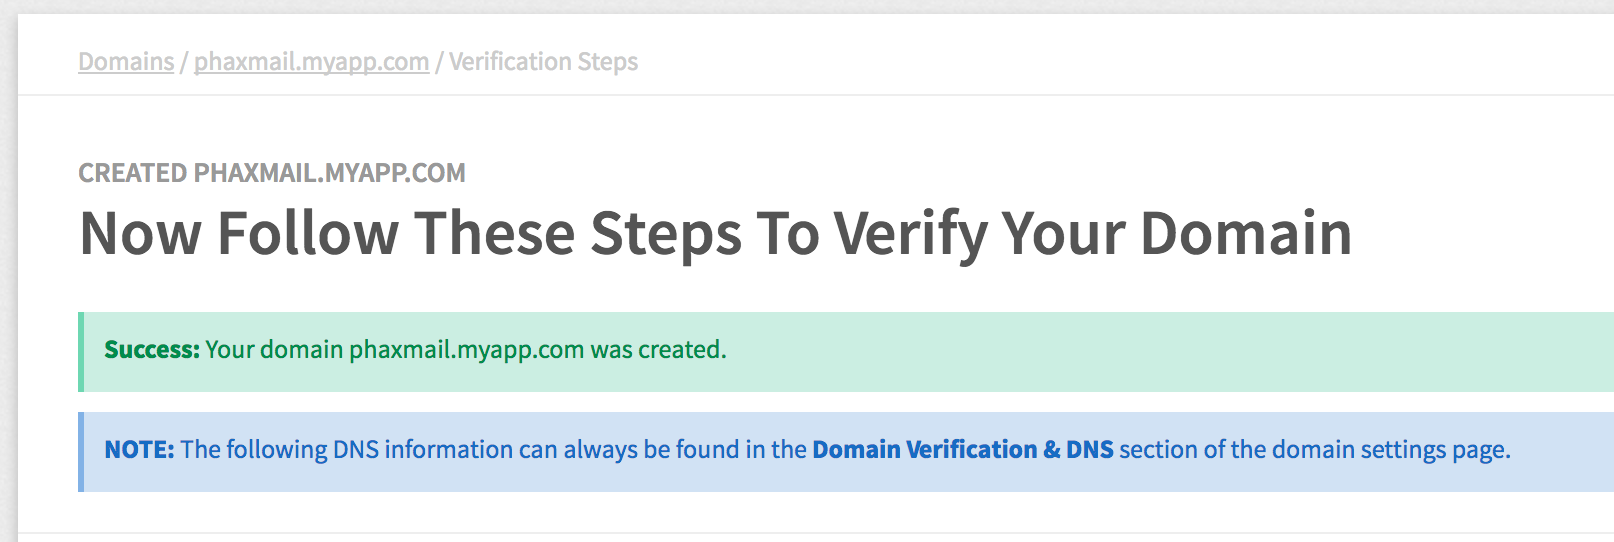 Mailgun Verify Domain Page Screenshot